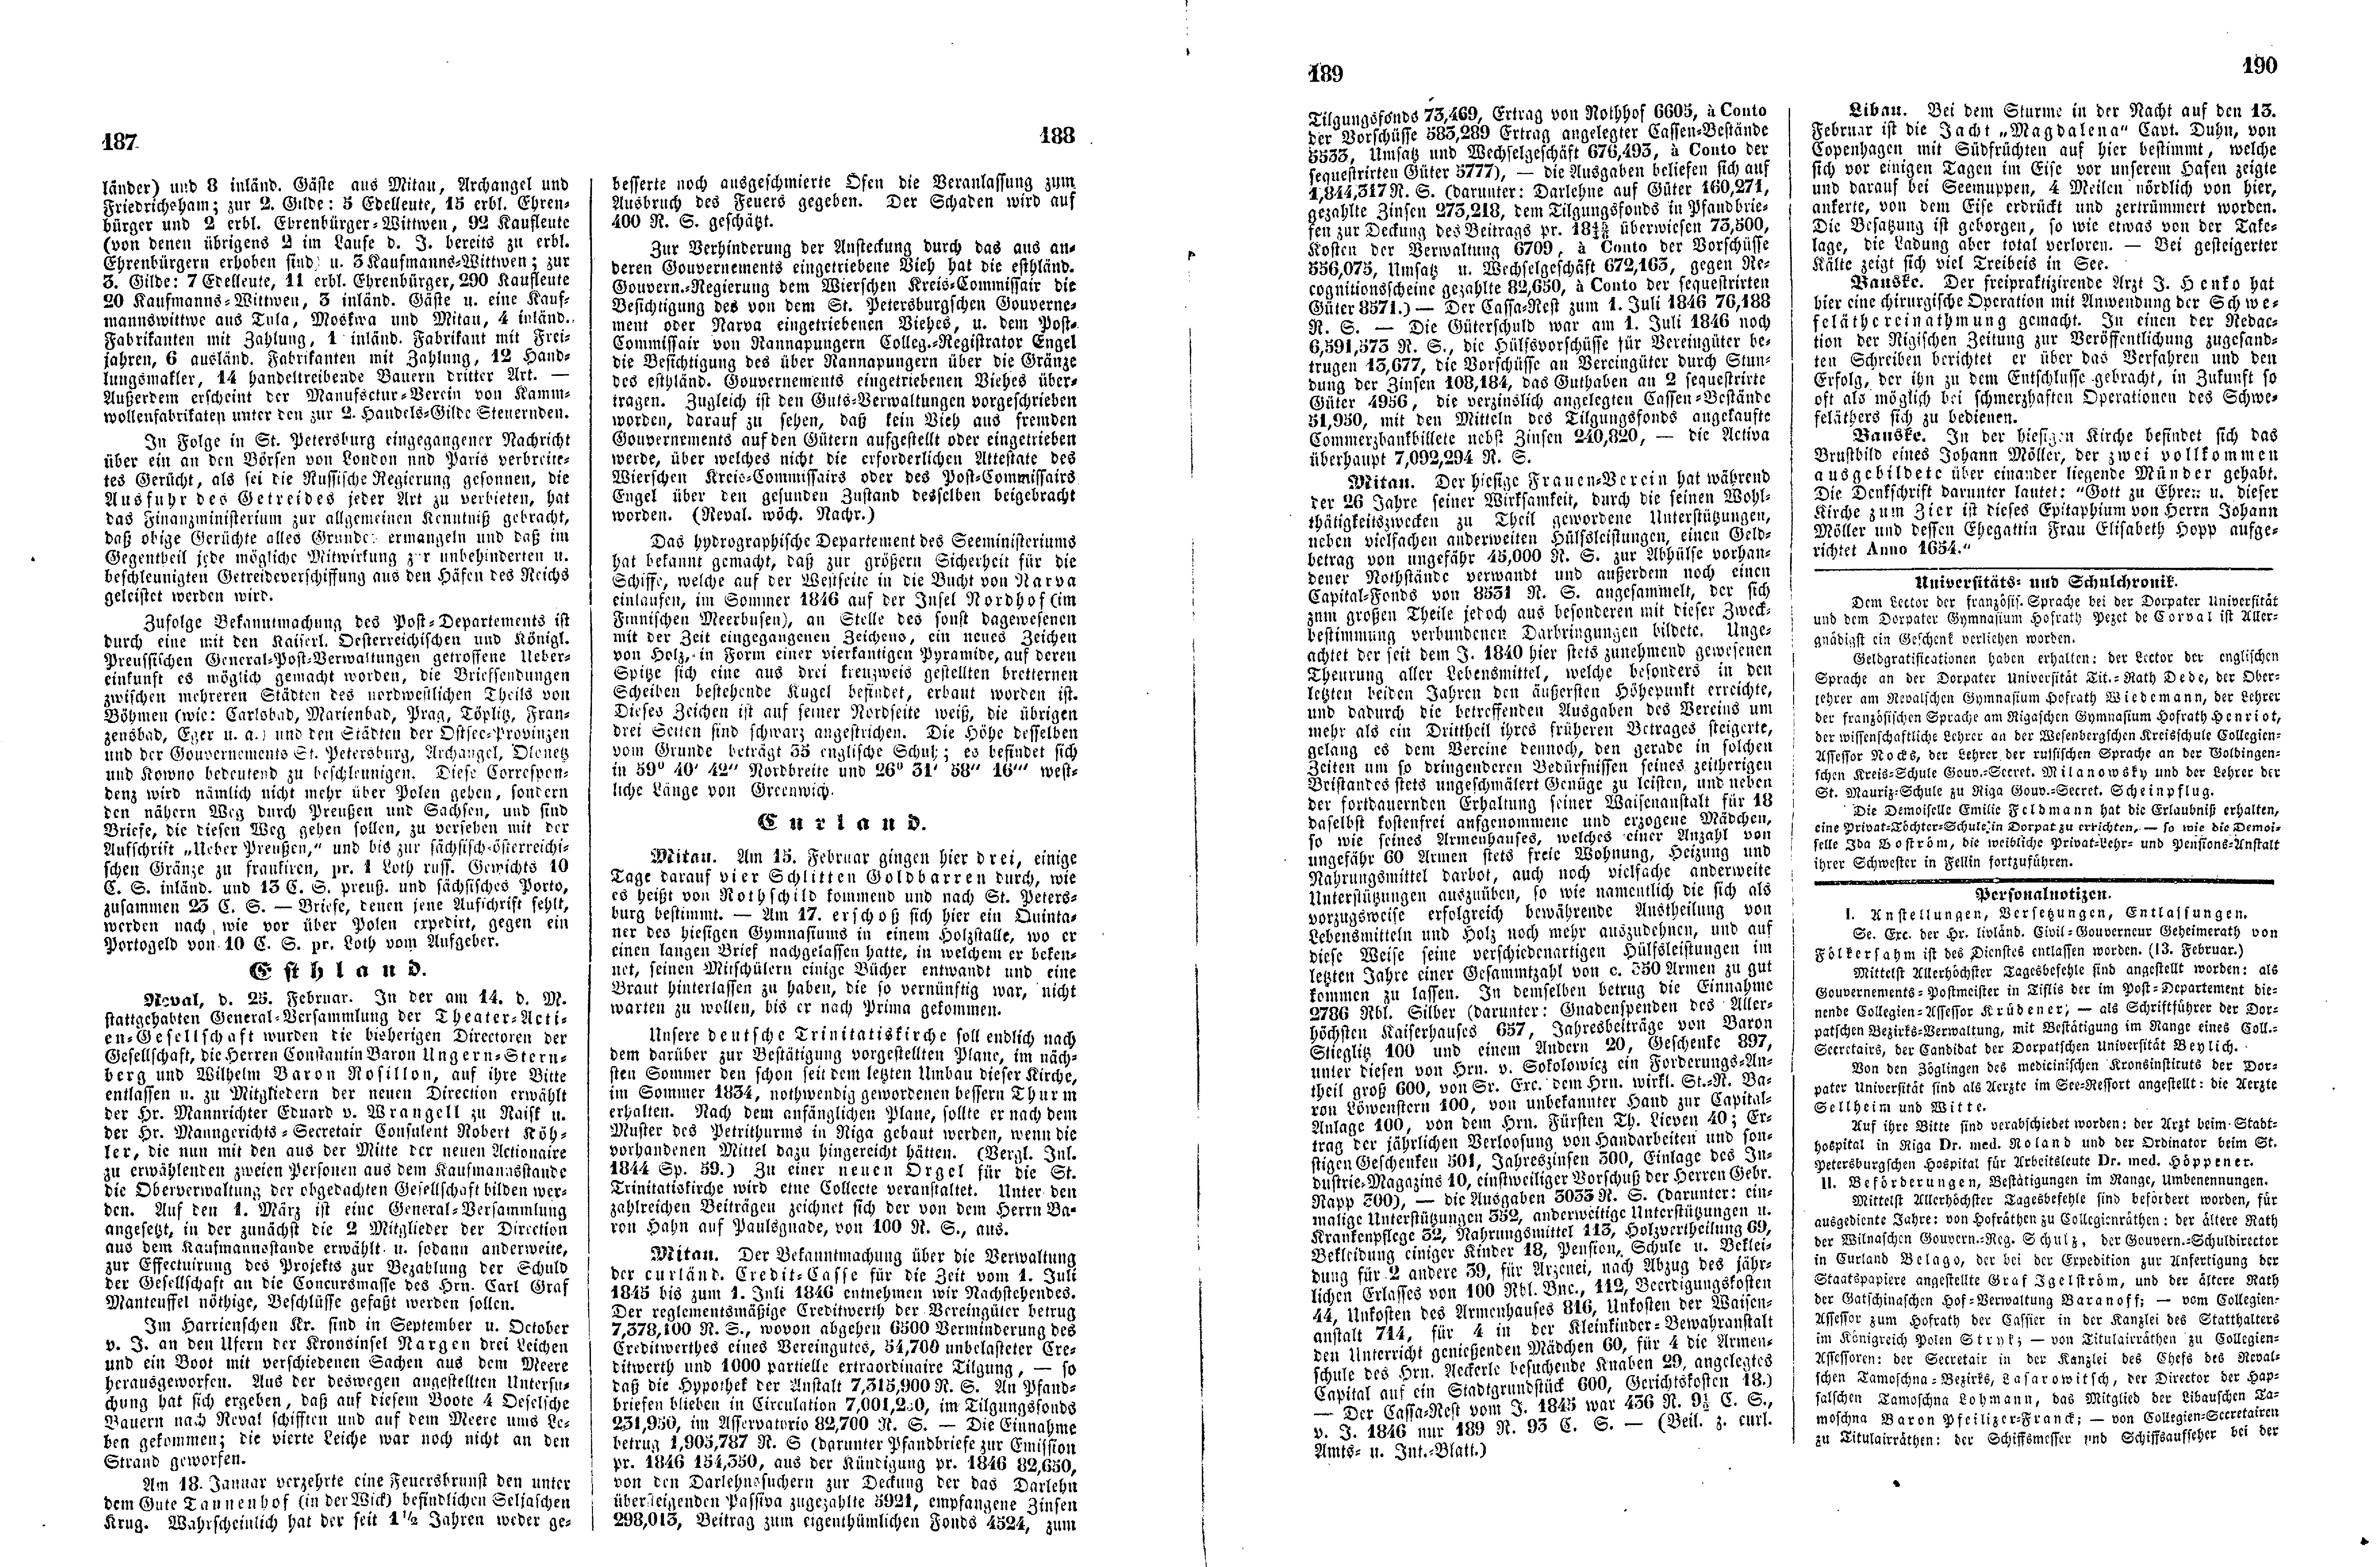 Das Inland [12] (1847) | 52. (187-190) Main body of text